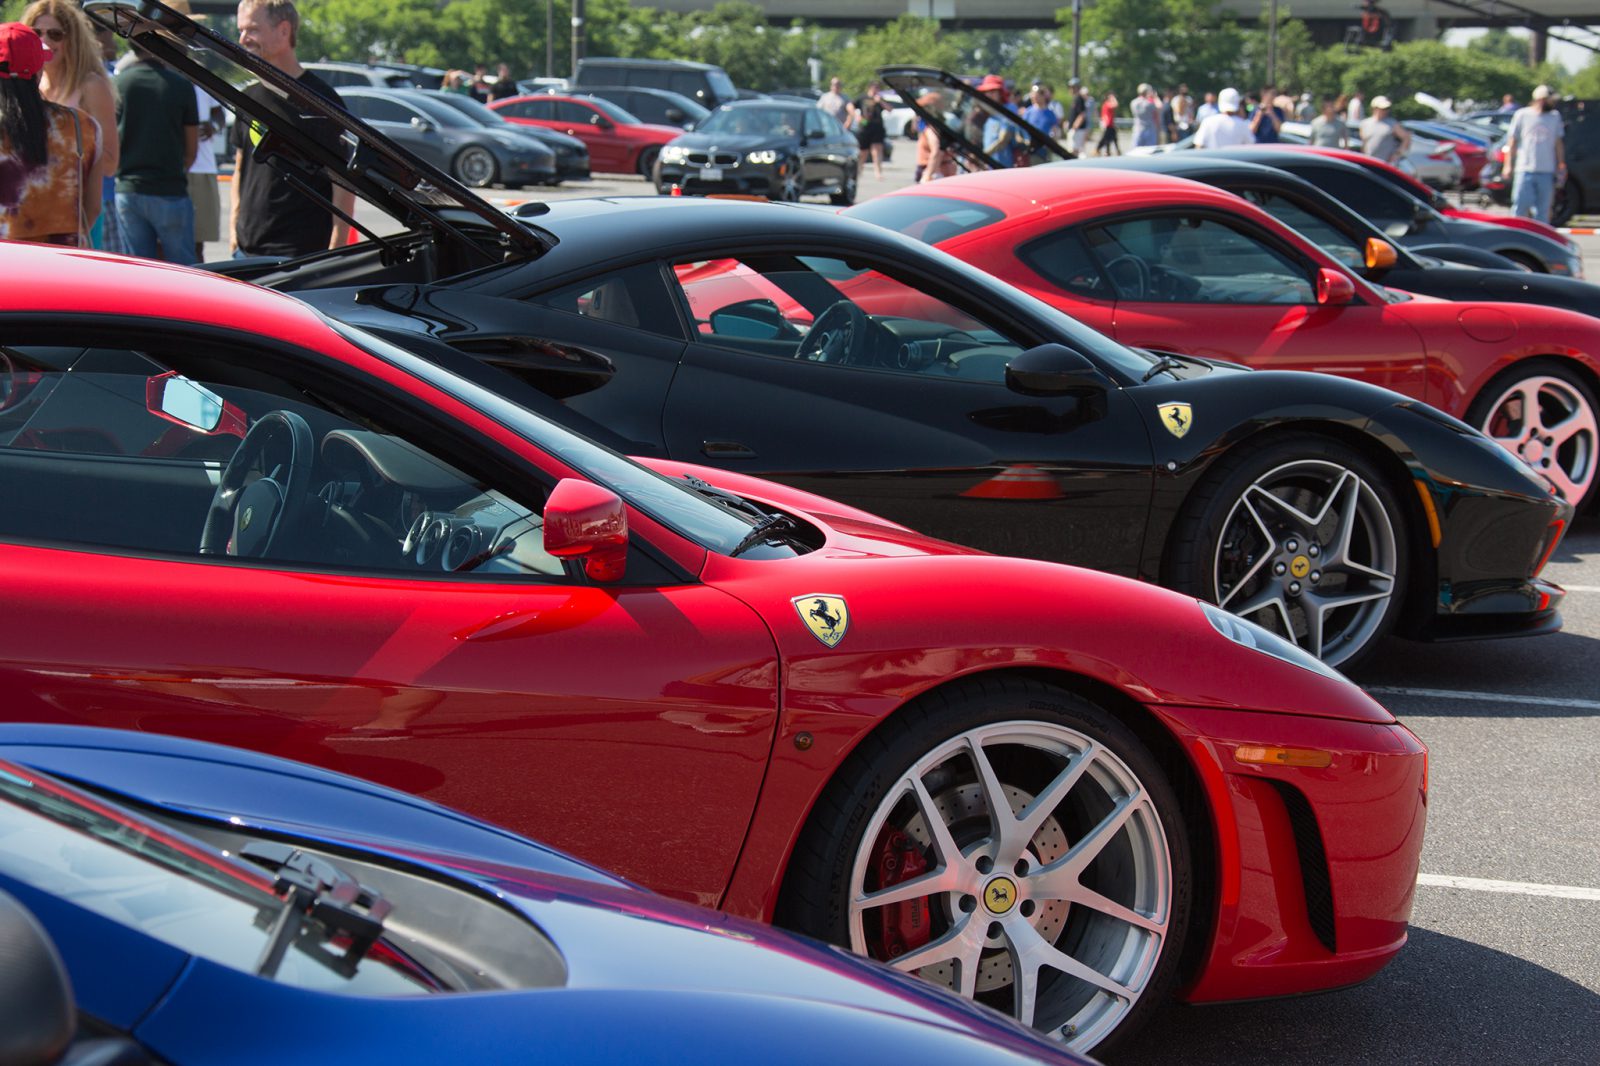 Rows of Ferrari's at car show